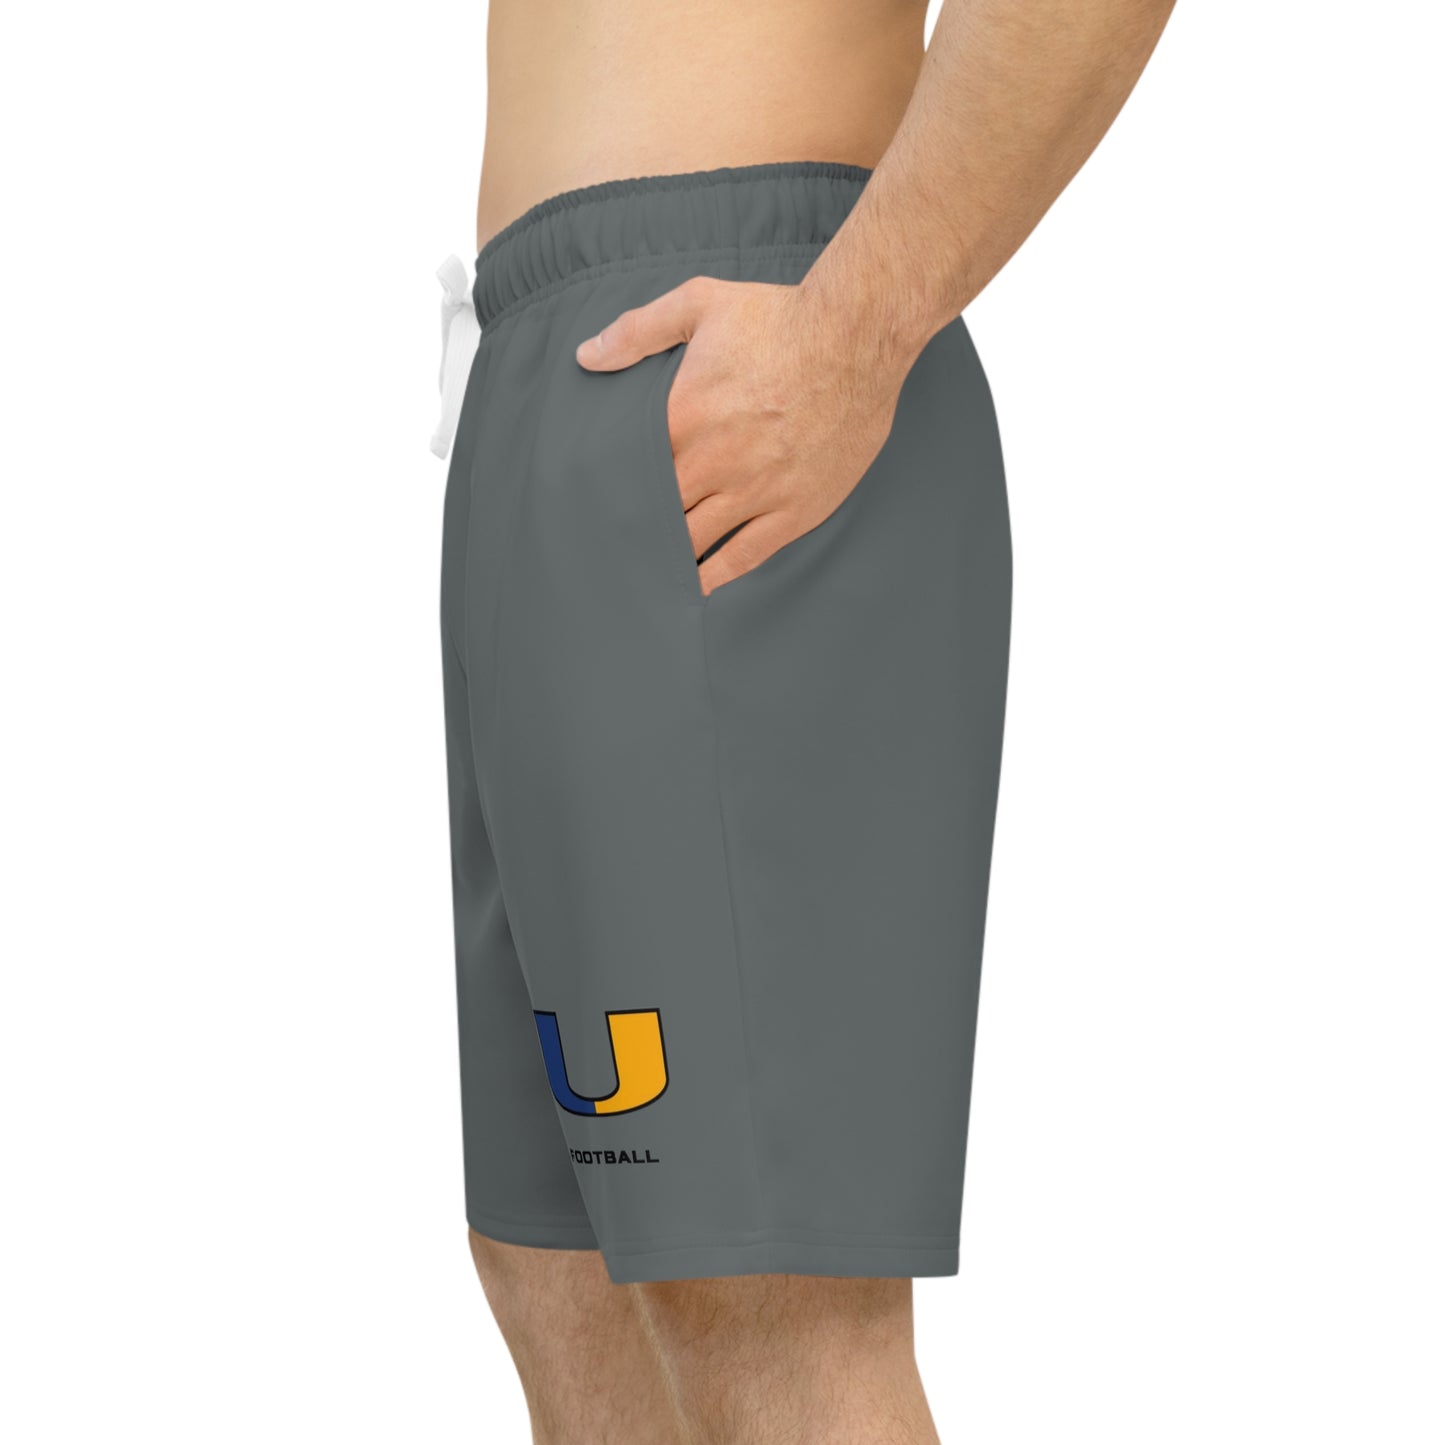 Redford Union Shorts